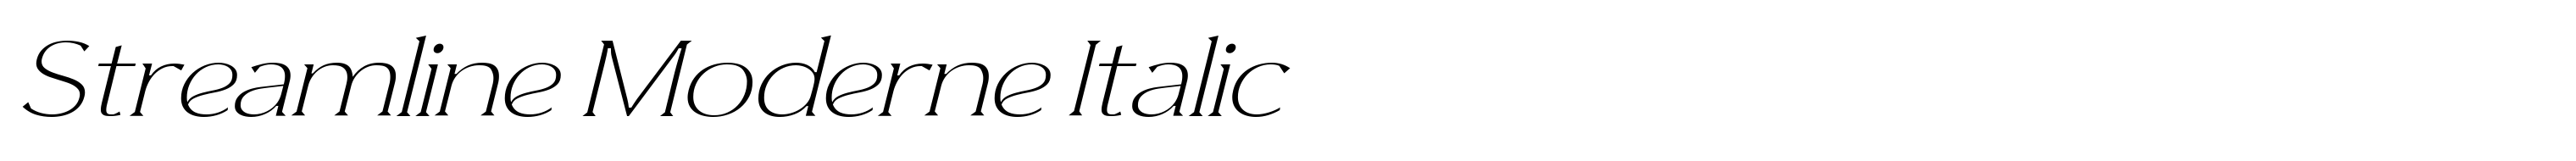 Streamline Moderne Italic